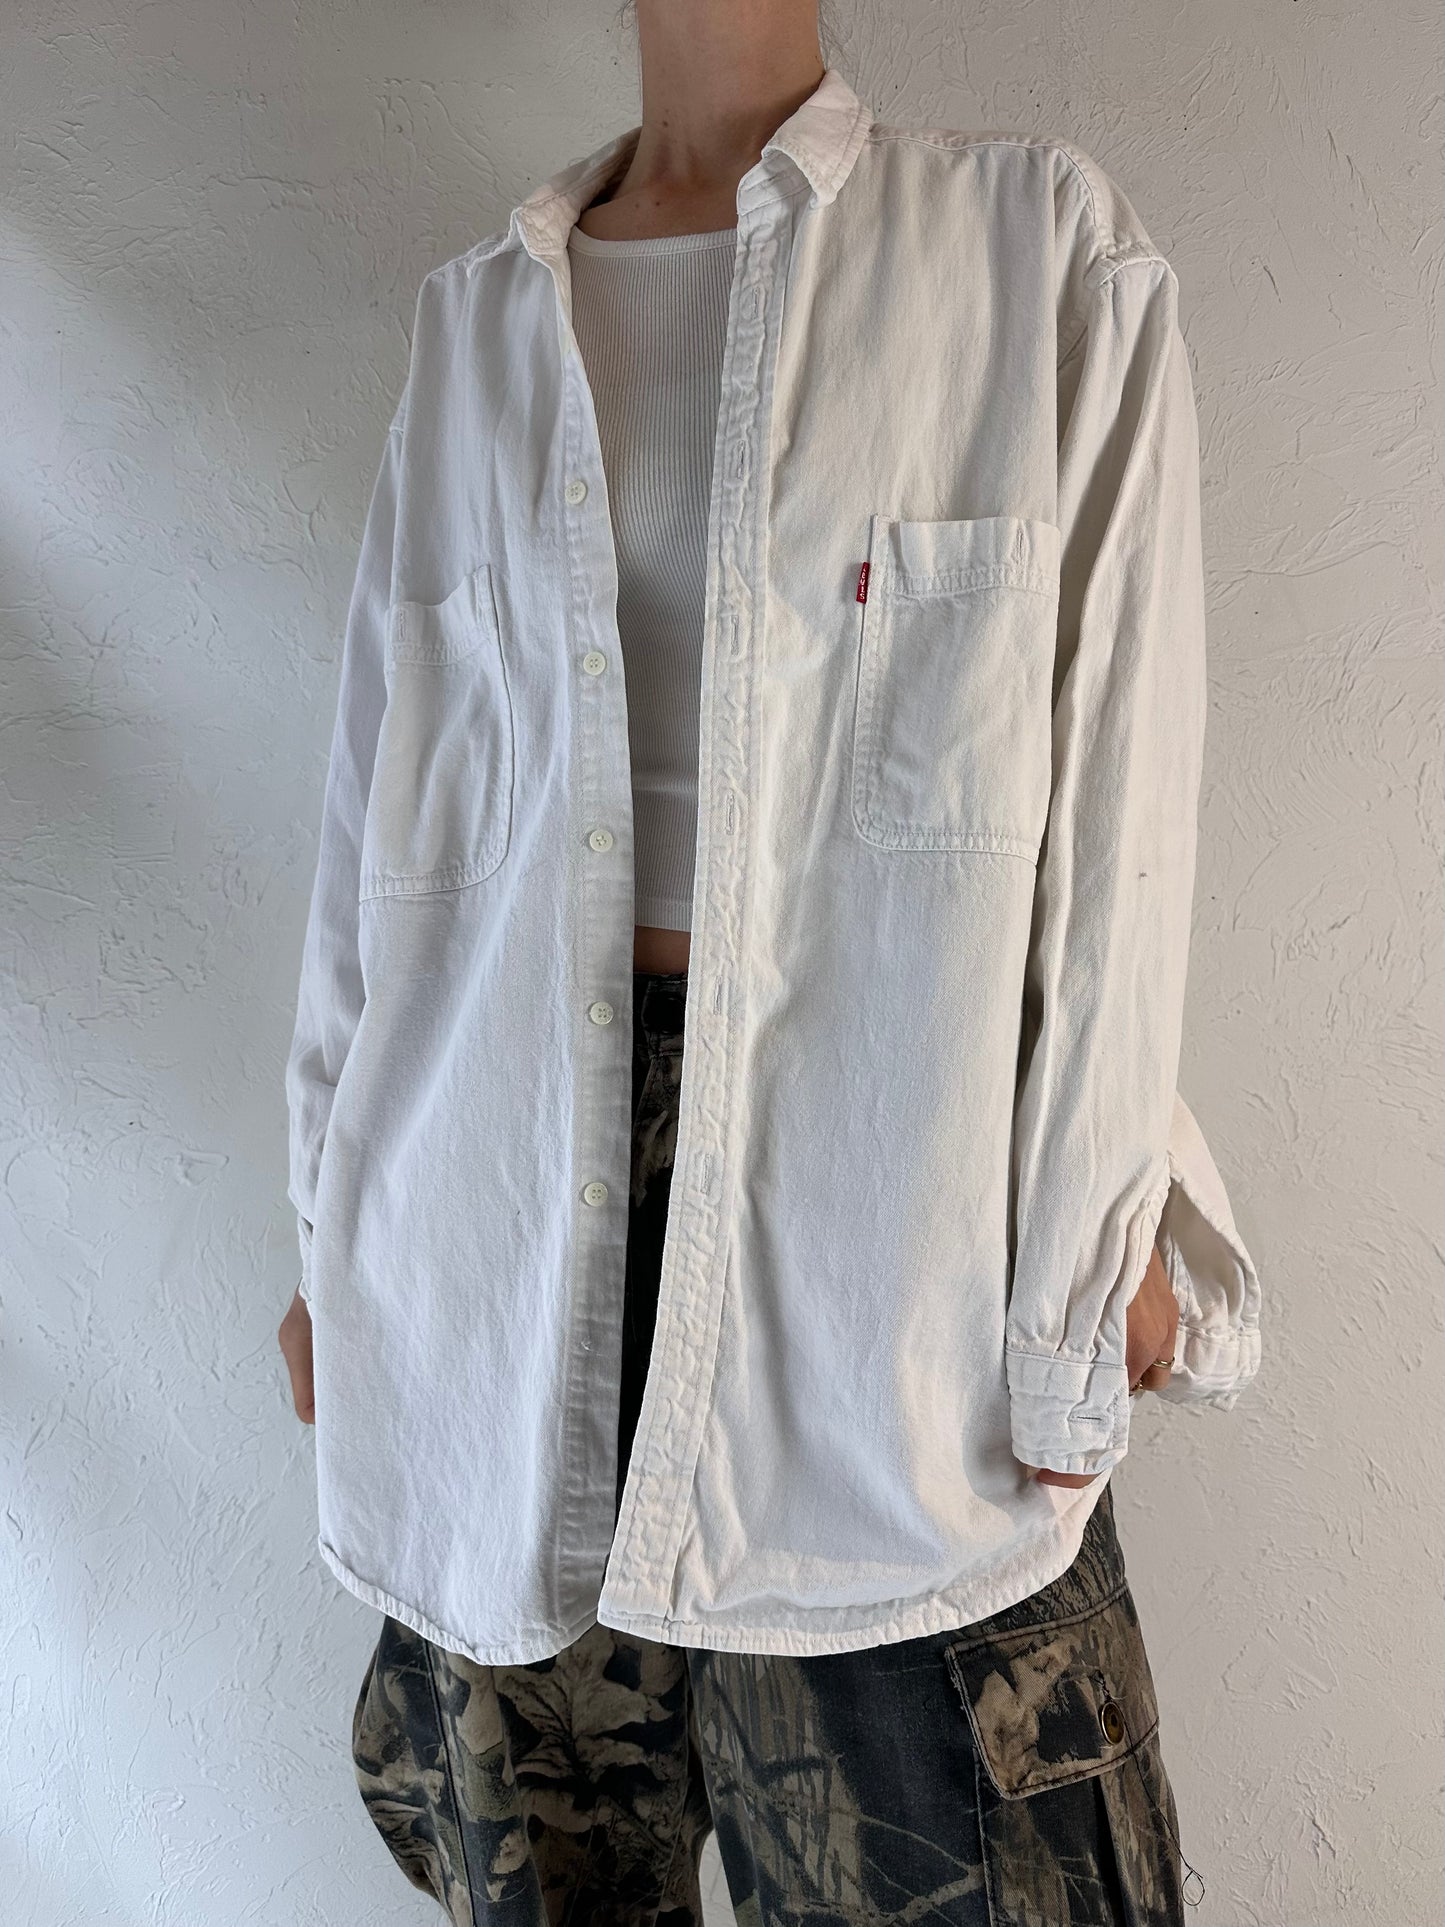 90s 'Levis' White Button Up Shirt / XL